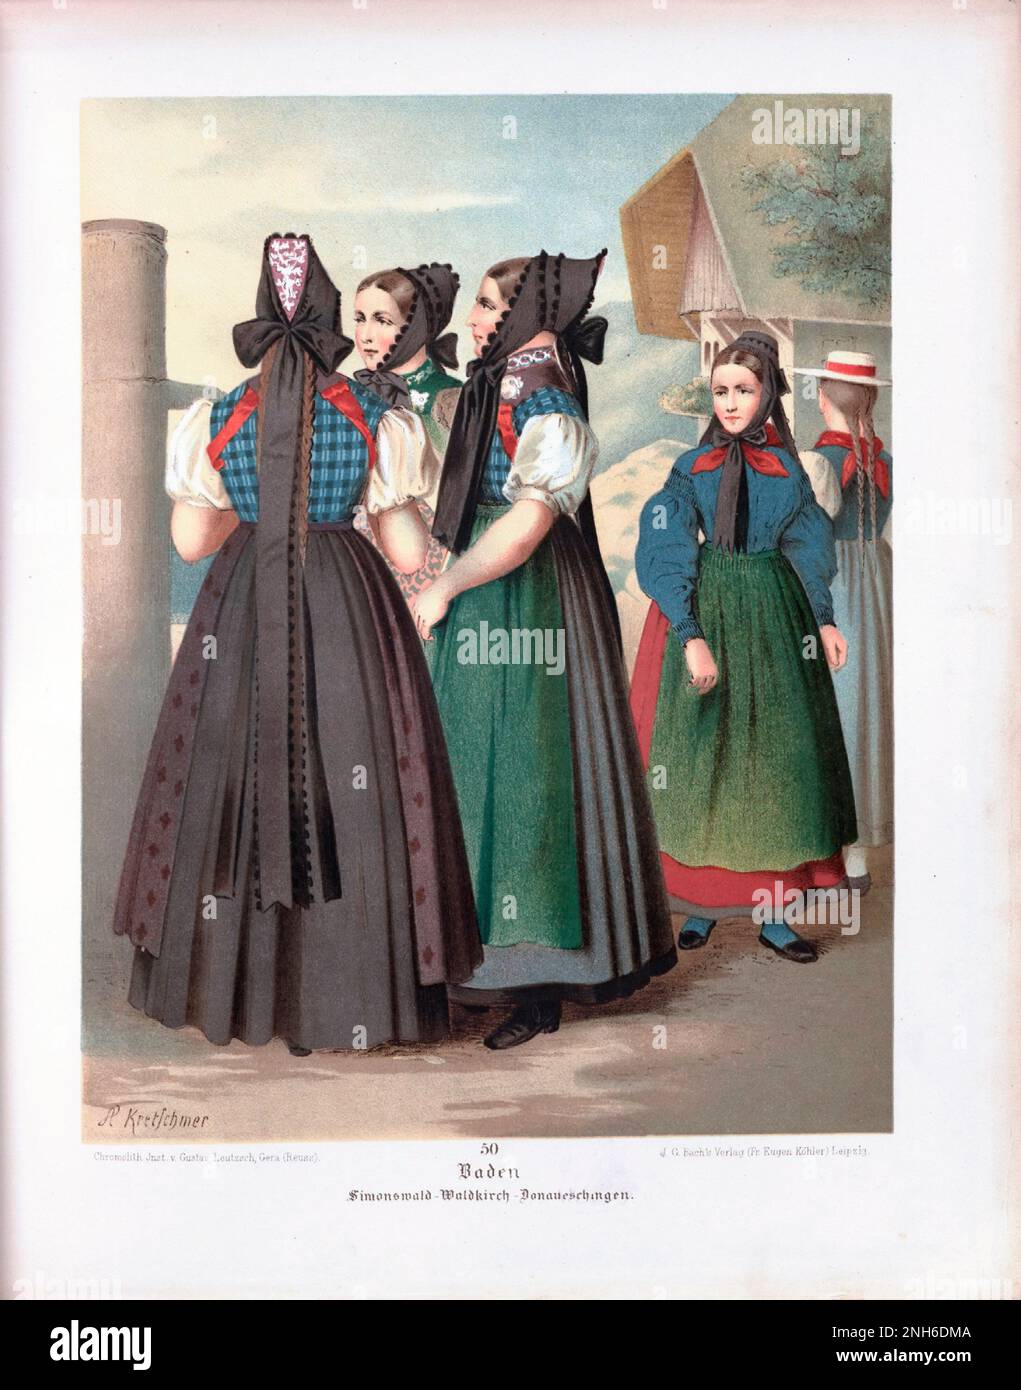 Disfraz folclórico alemán. Baden; Simoswald, Waldkirch, Donaueschingen. litografía del siglo 19th. Foto de stock